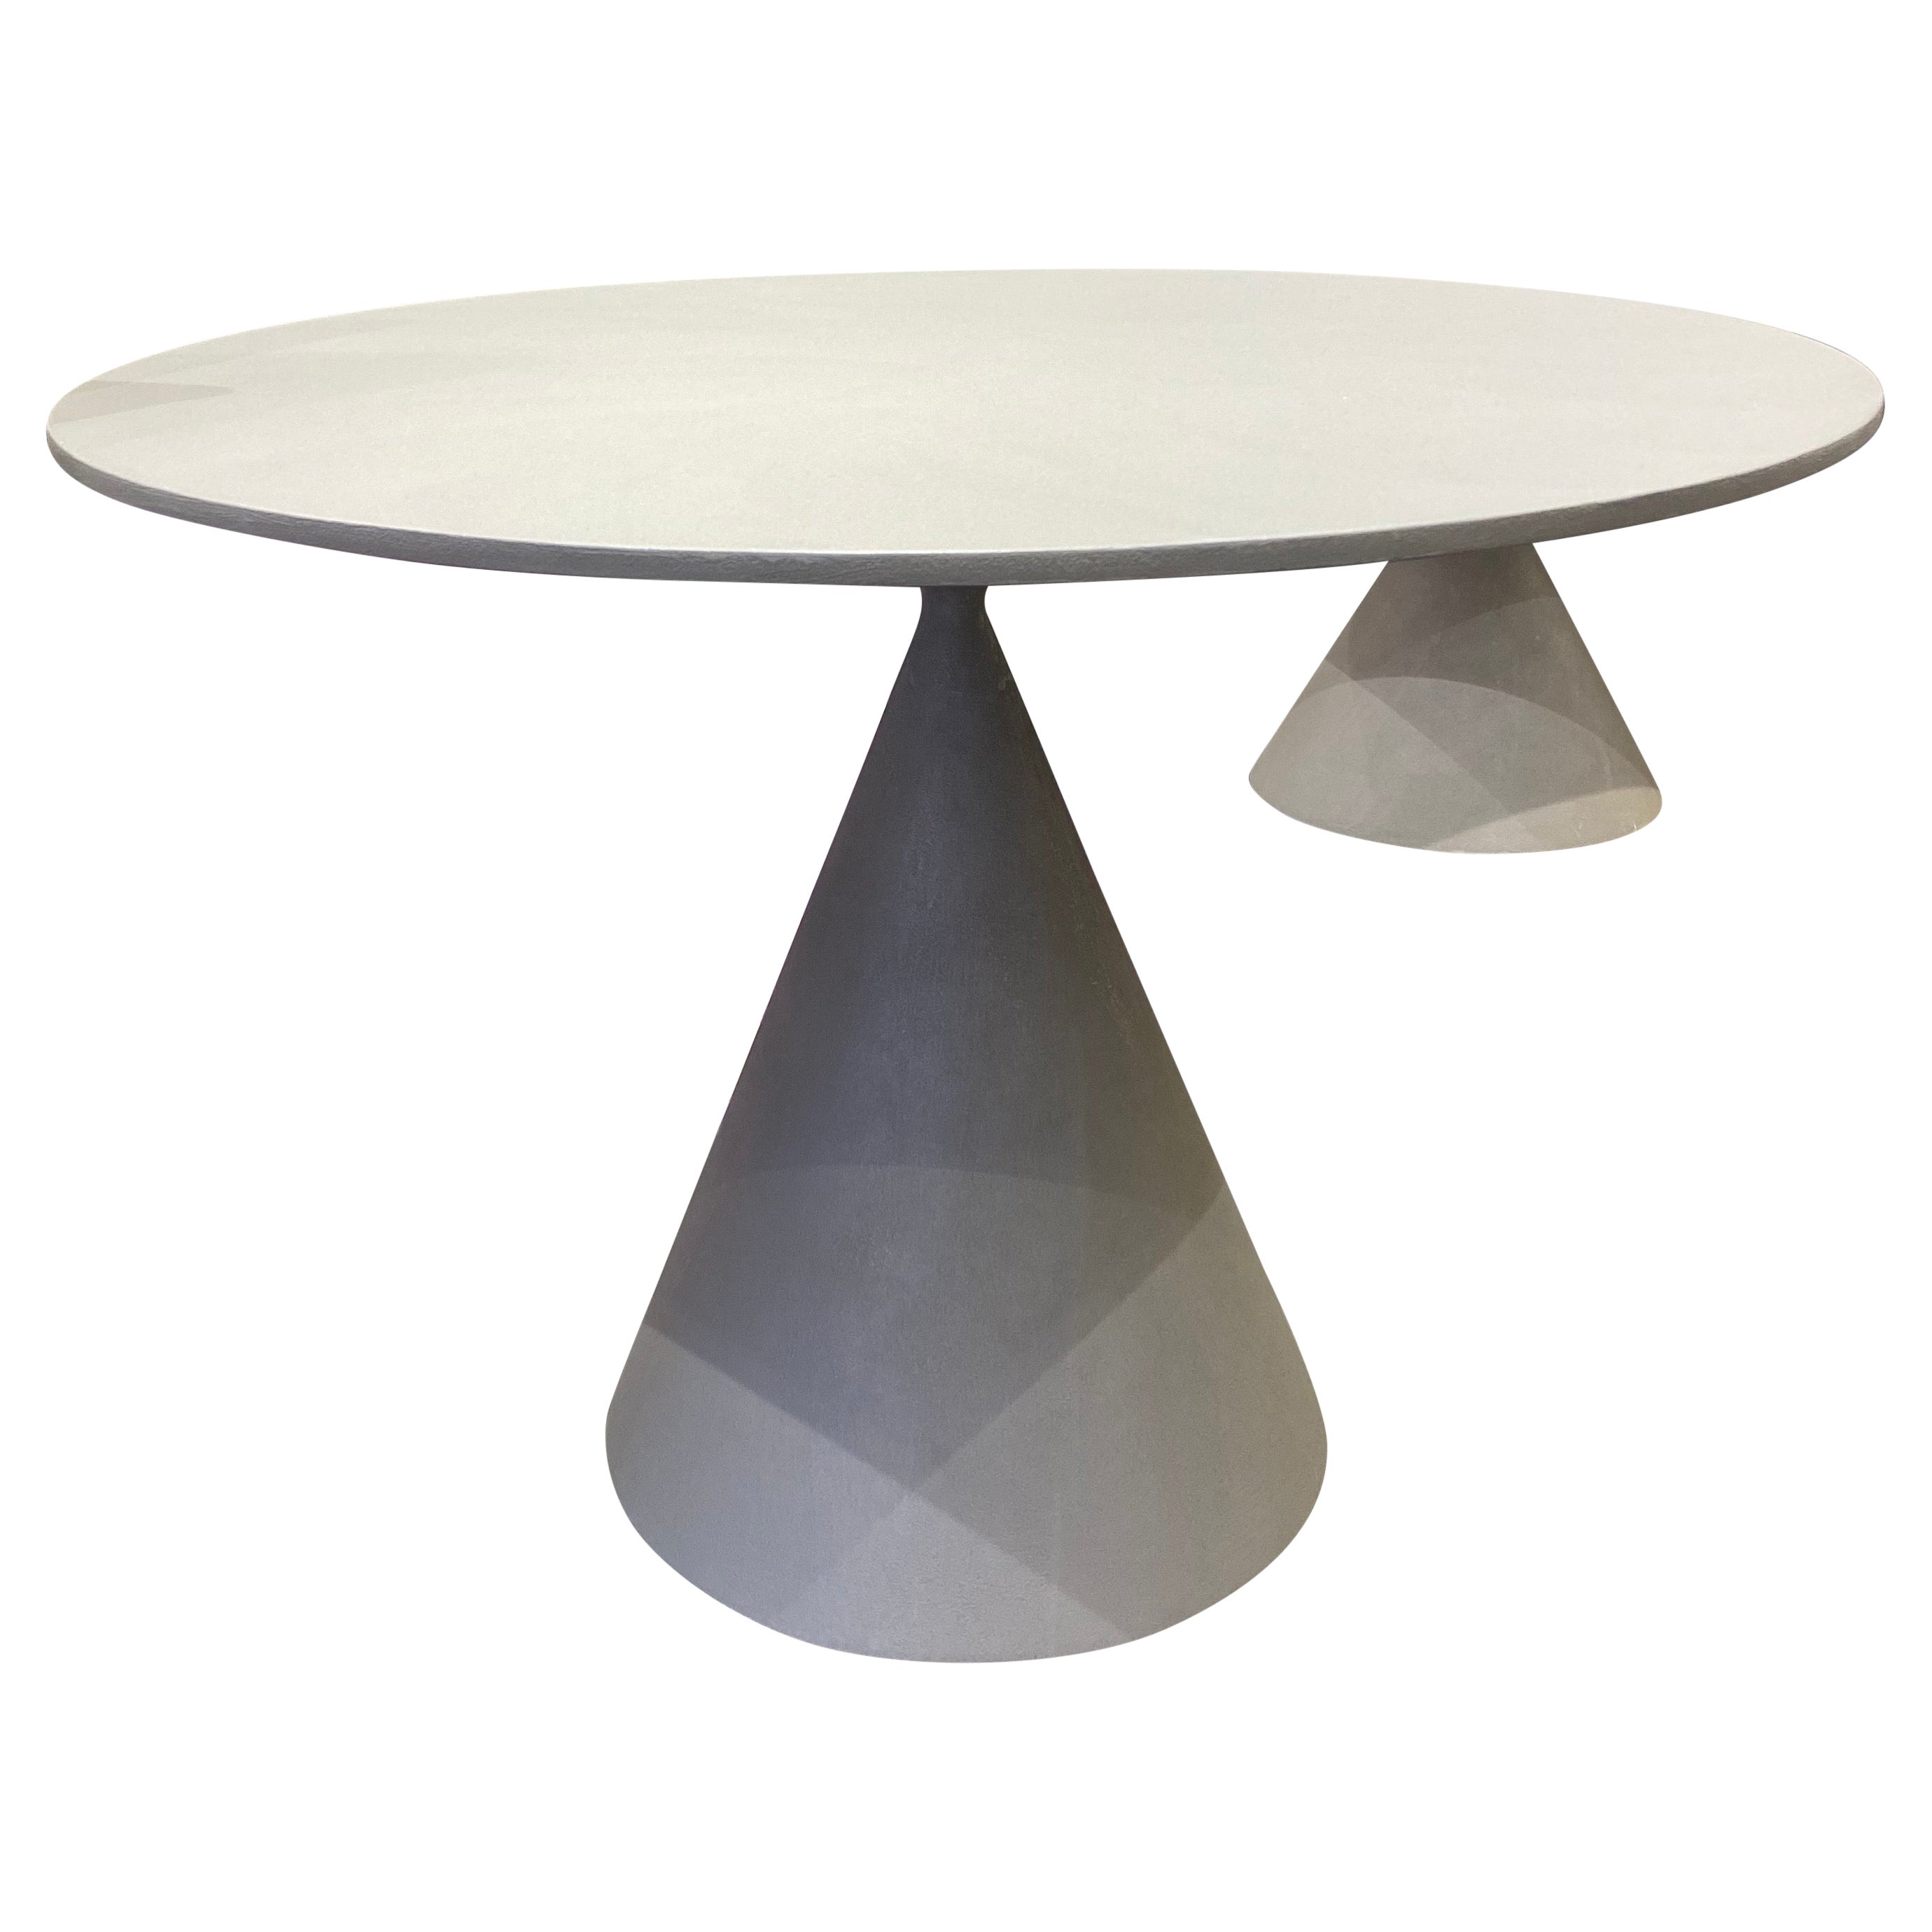  Desalto Mini Clay Side Table by Marc Krusin